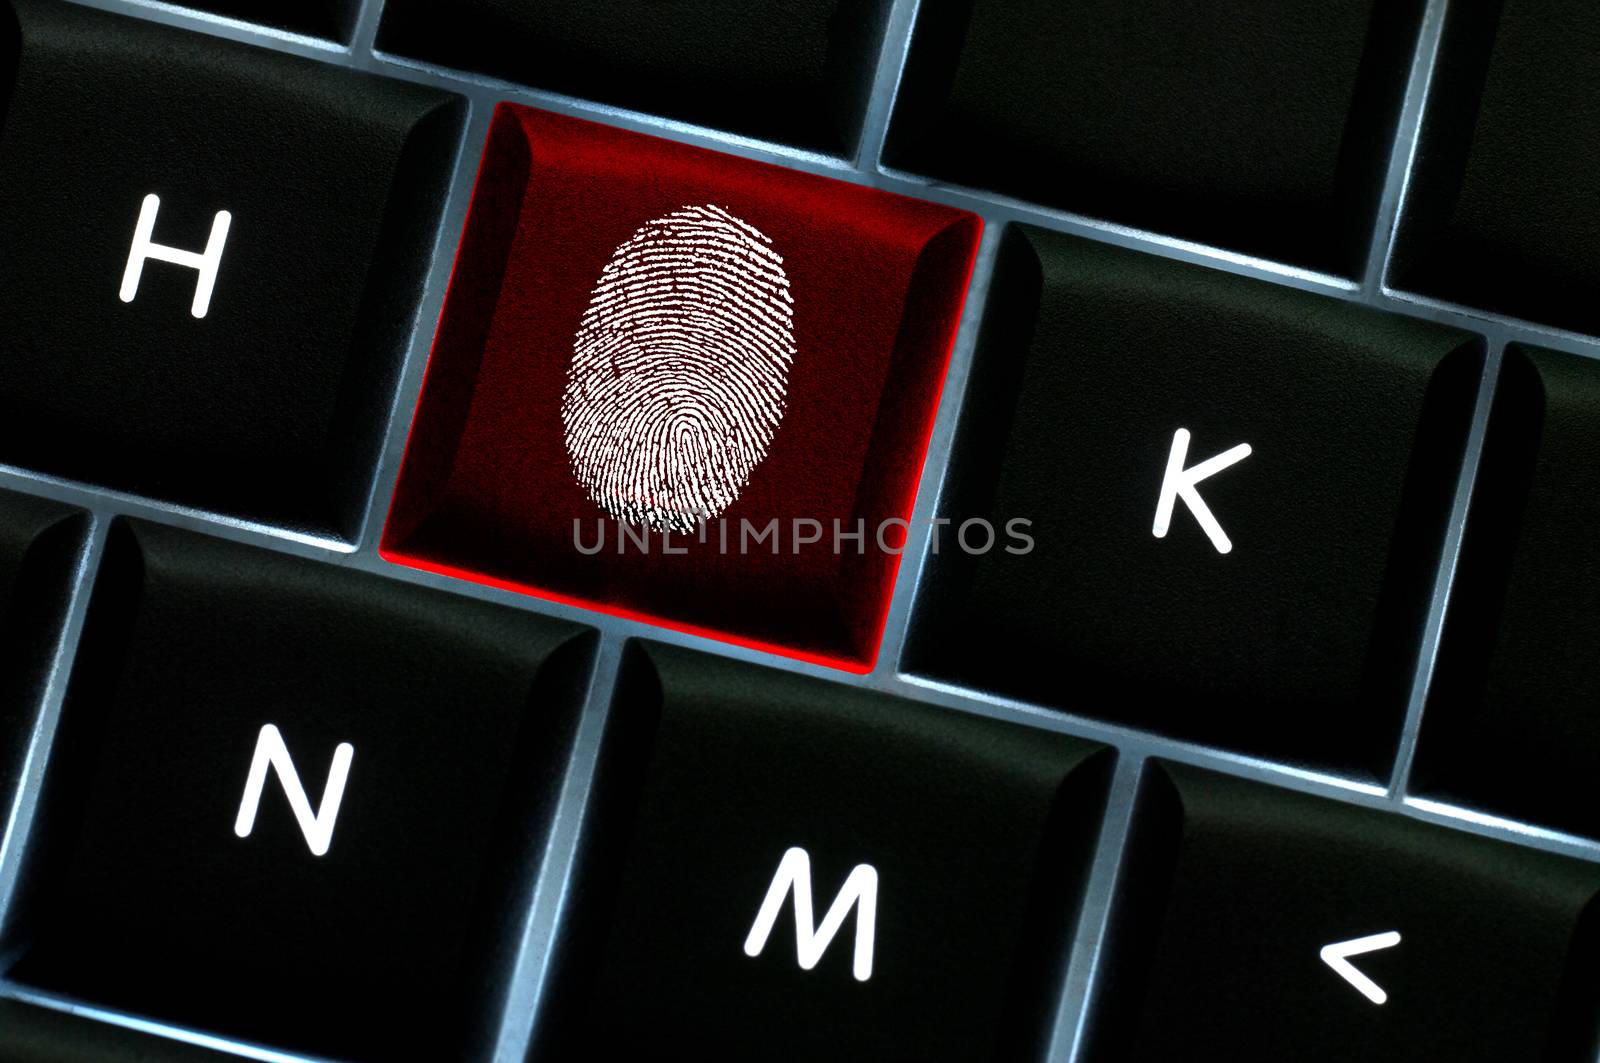 Online crime scene concept with the fingerprint left on a backli by daoleduc